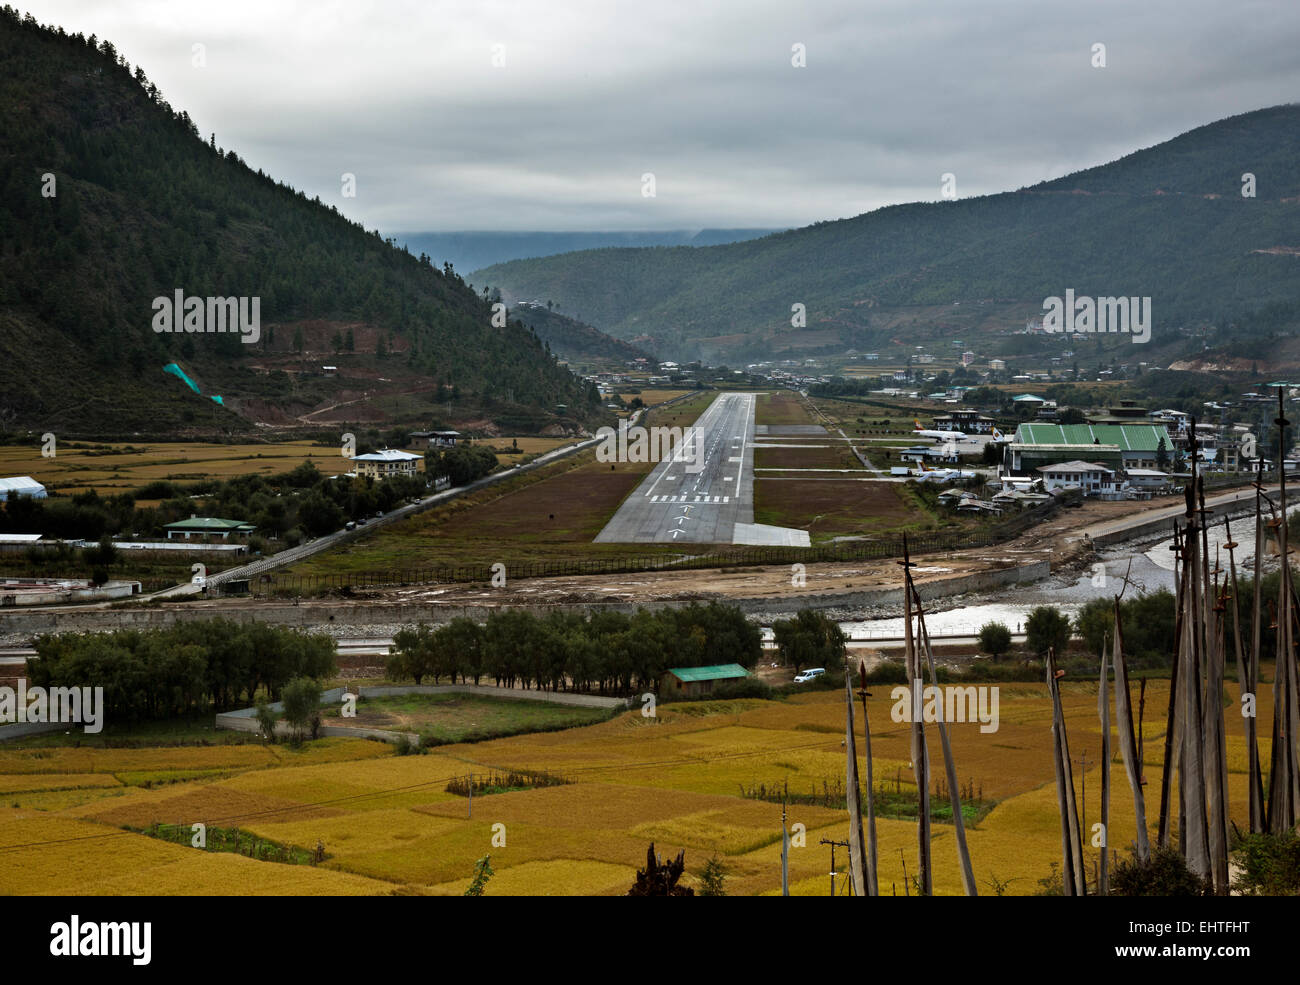 BU00381-00...BHUTAN - The Paro International Airport and the Paro Chhu (River), surrounded by grain fields. Stock Photo